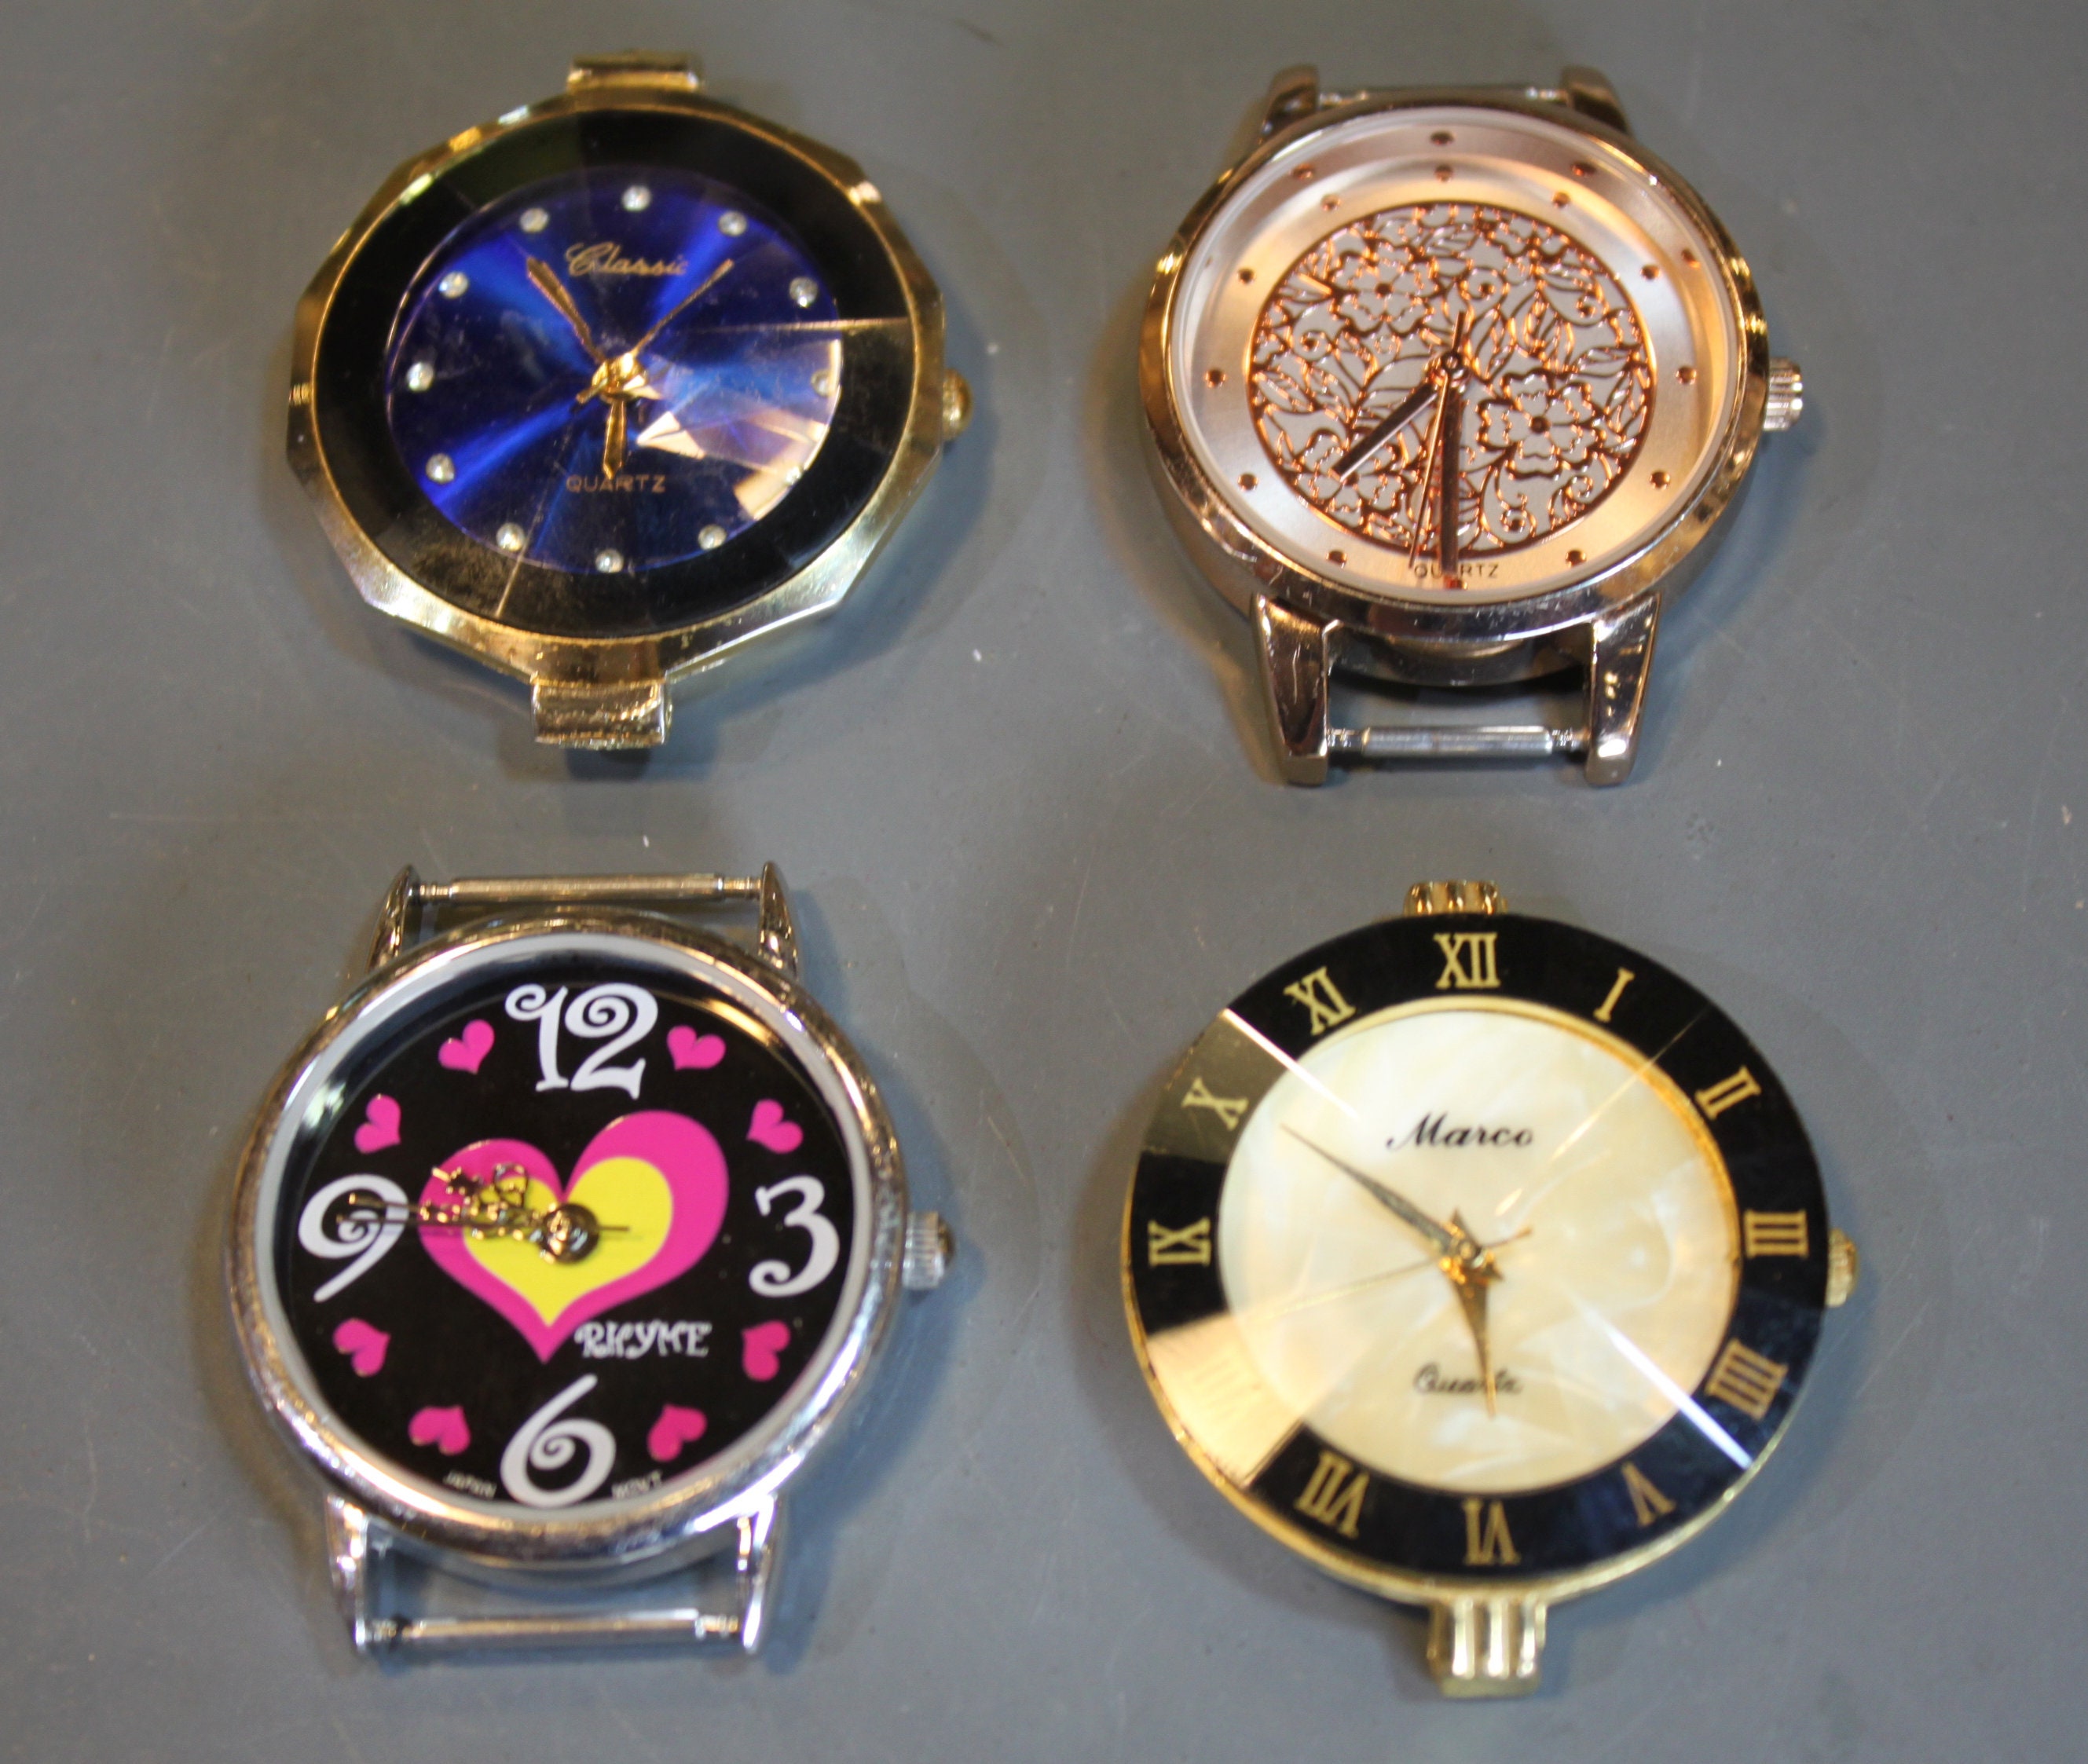 Watch & Wares, Estate Jewelry, Luxury Watches